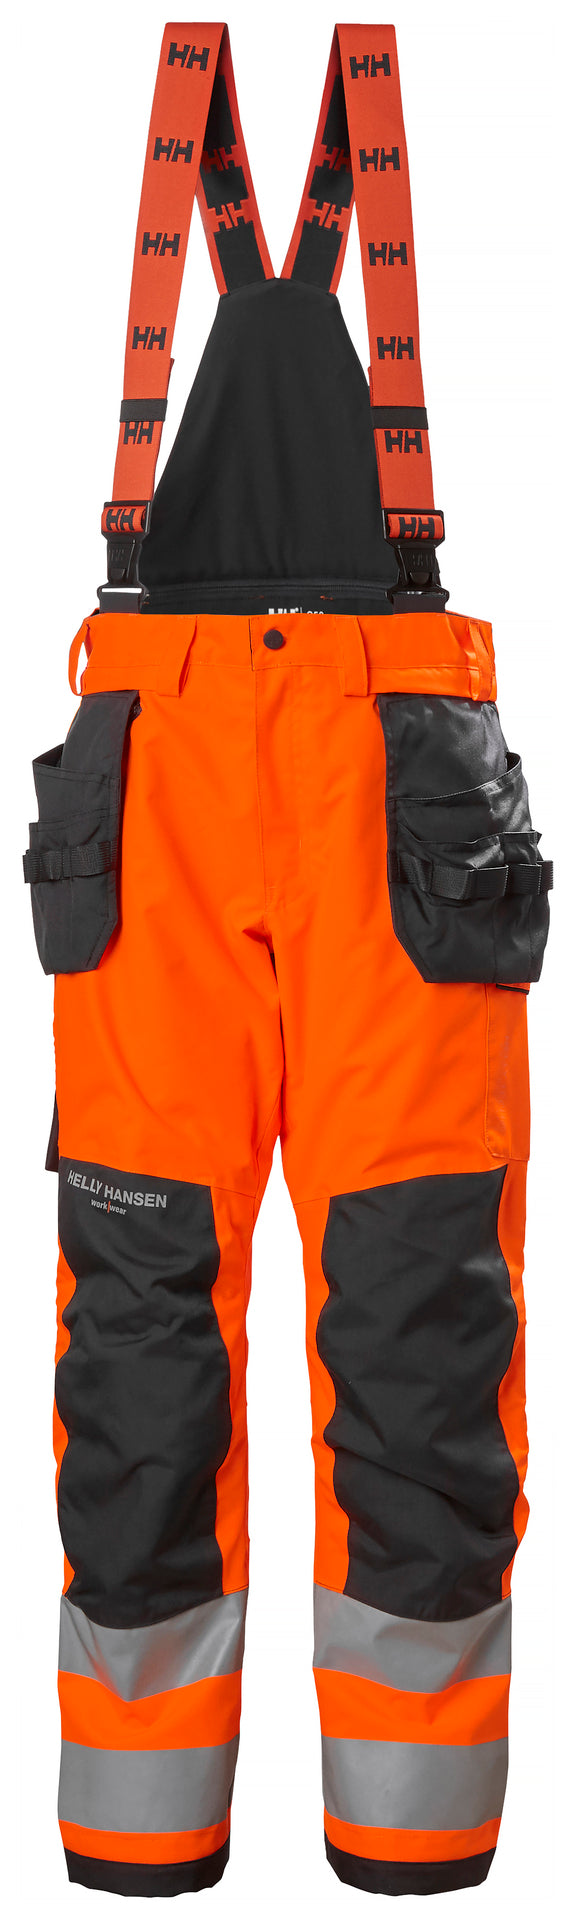 Helly Hansen Alna 2.0 Winter Construction Trousers Cl 2 - Orange